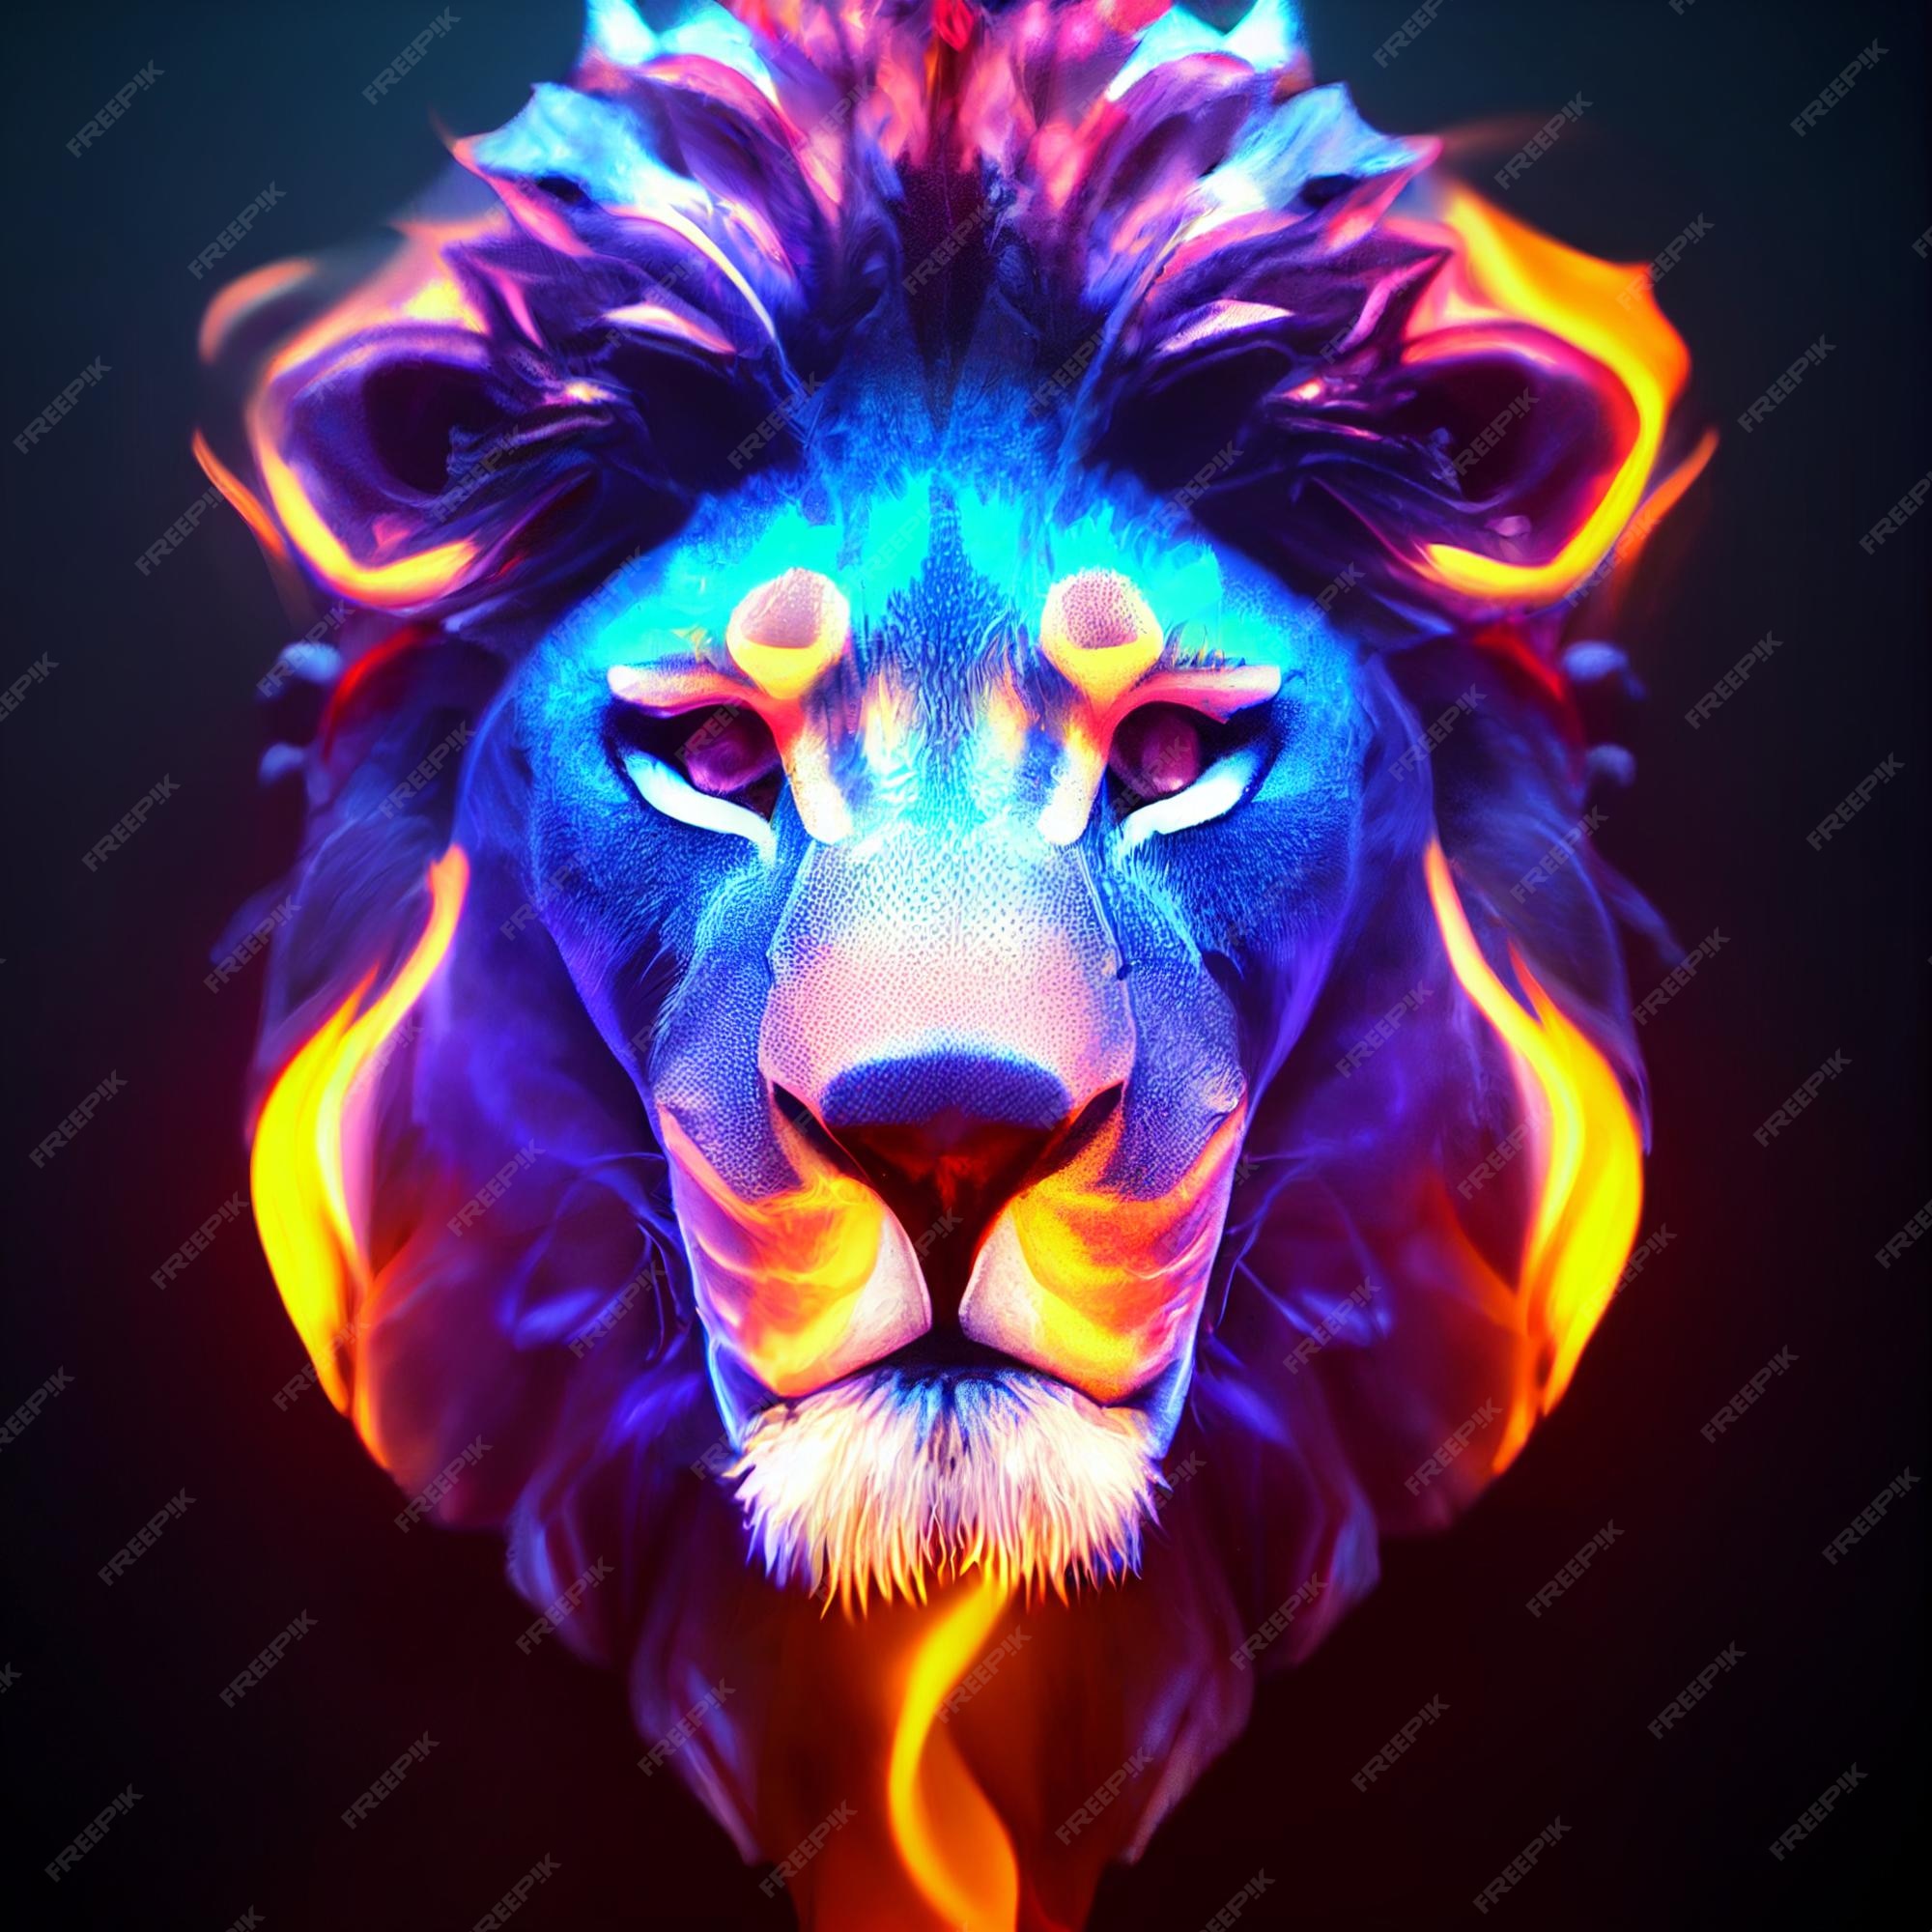 Premium Photo | Psychedelic lion portrait neon colors spirit animal